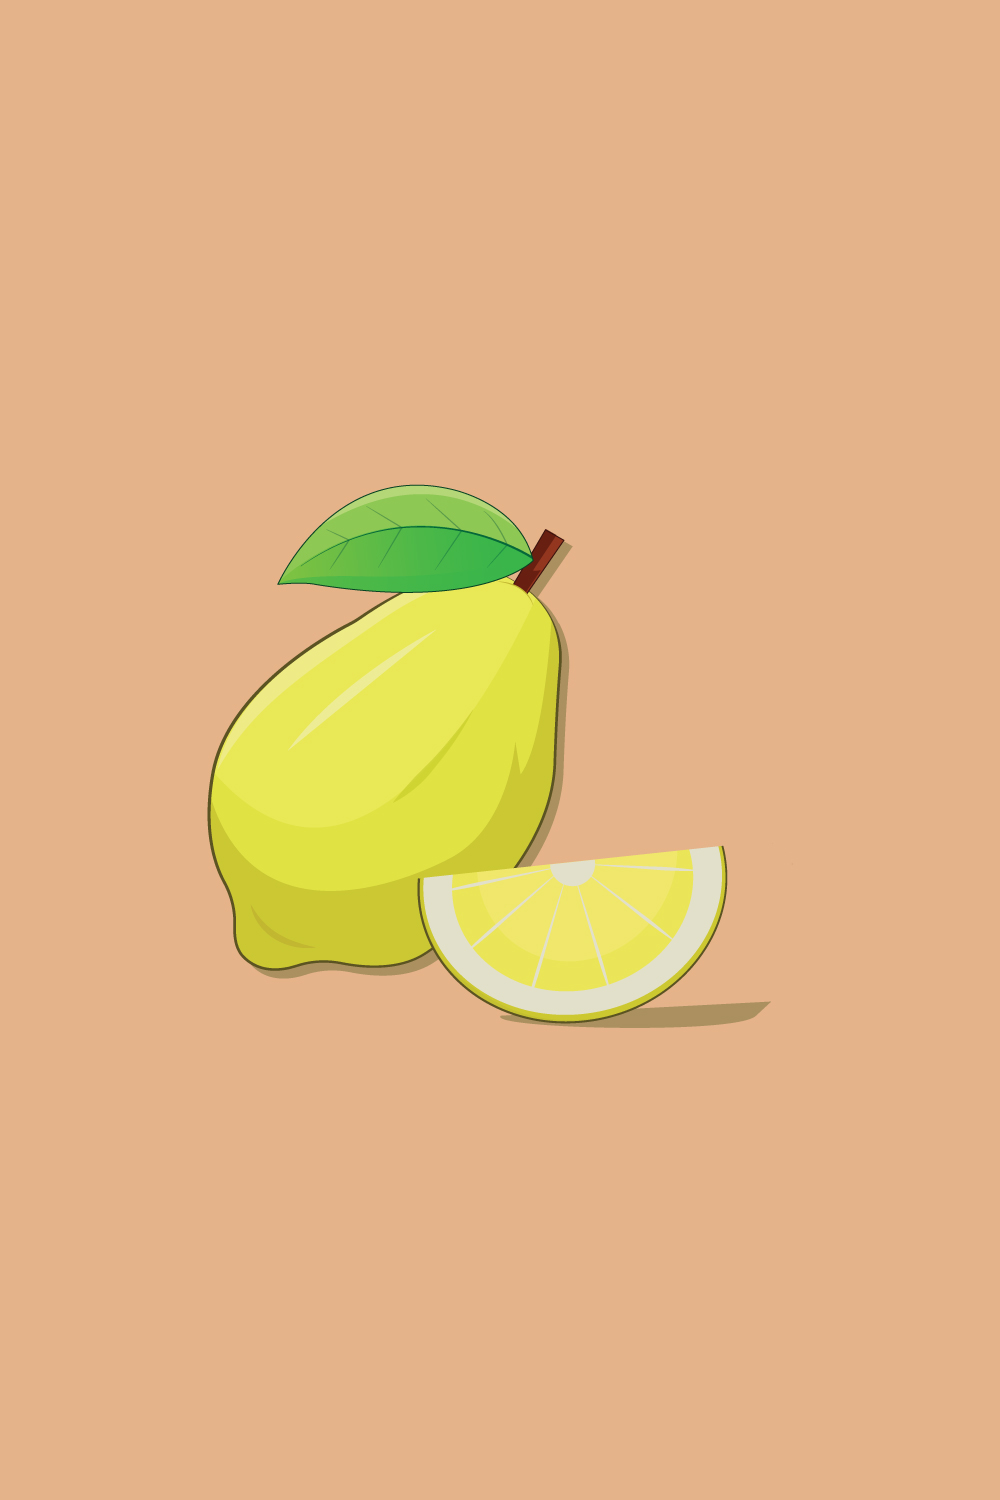 lemon vector pinterest preview image.